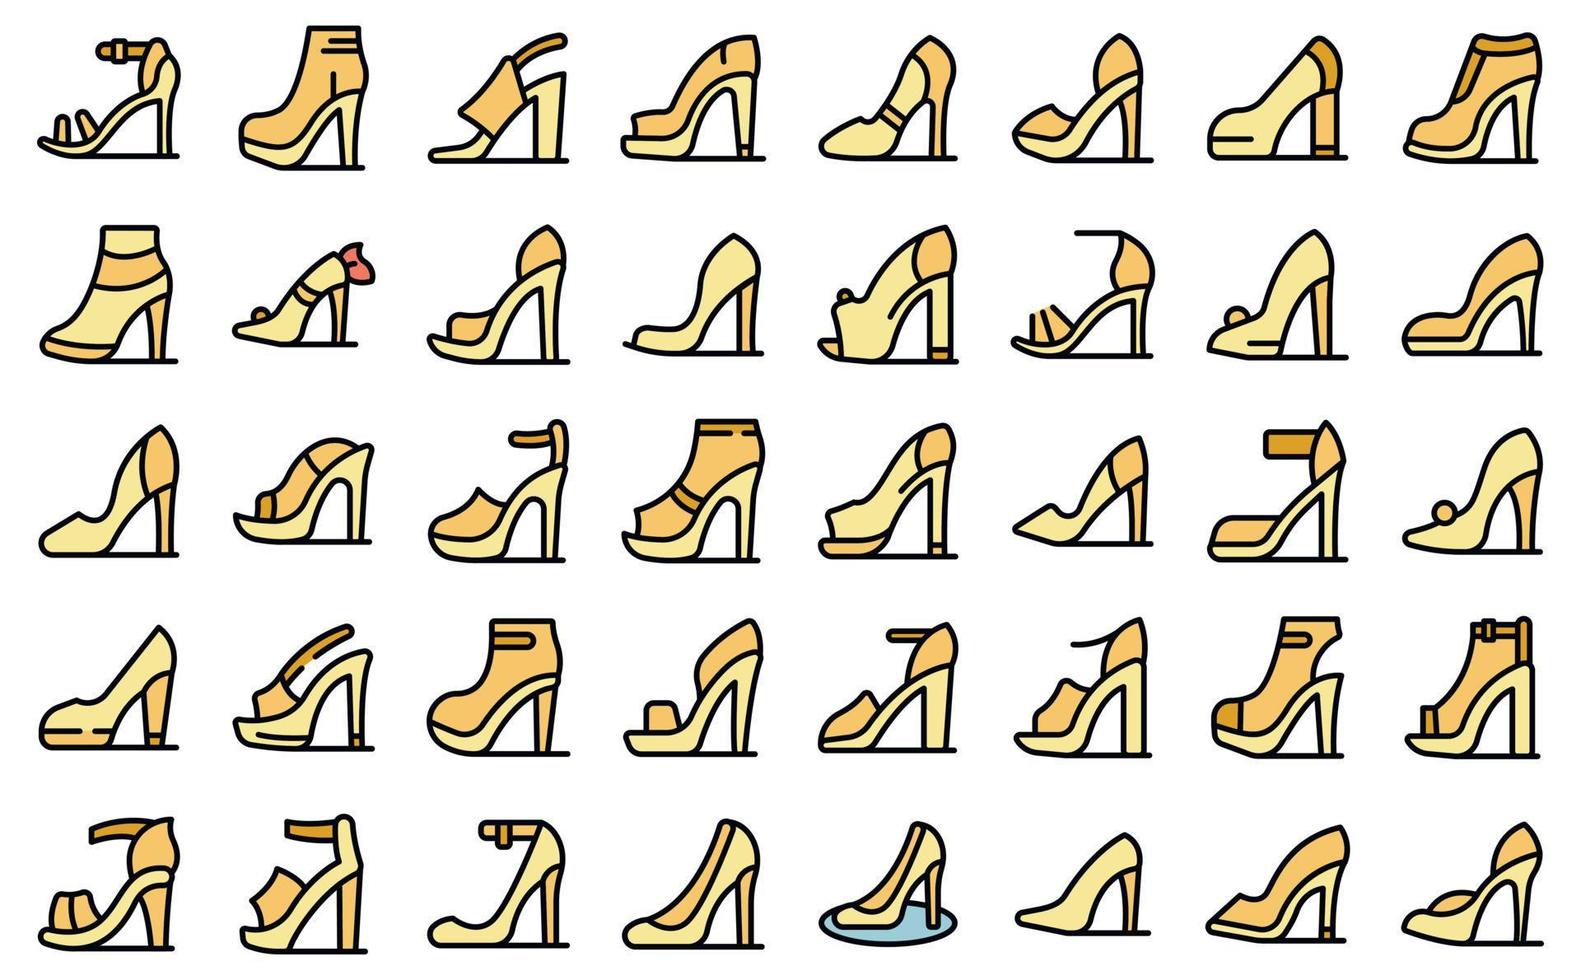 High heels woman shoes icons set vector flat